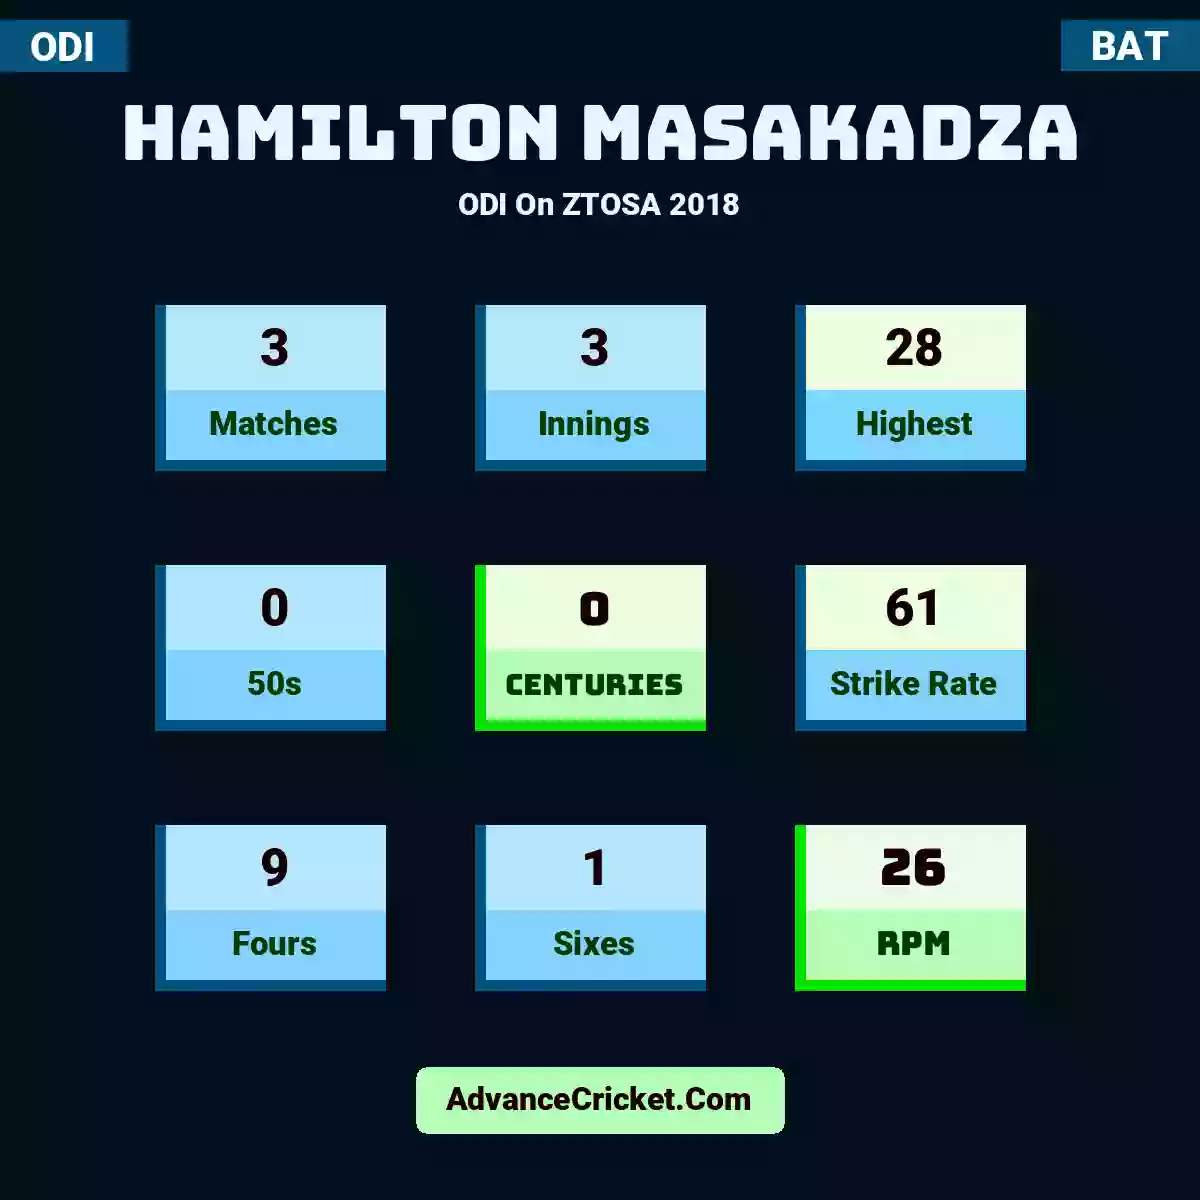 Hamilton Masakadza ODI  On ZTOSA 2018, Hamilton Masakadza played 3 matches, scored 28 runs as highest, 0 half-centuries, and 0 centuries, with a strike rate of 61. H.Masakadza hit 9 fours and 1 sixes, with an RPM of 26.